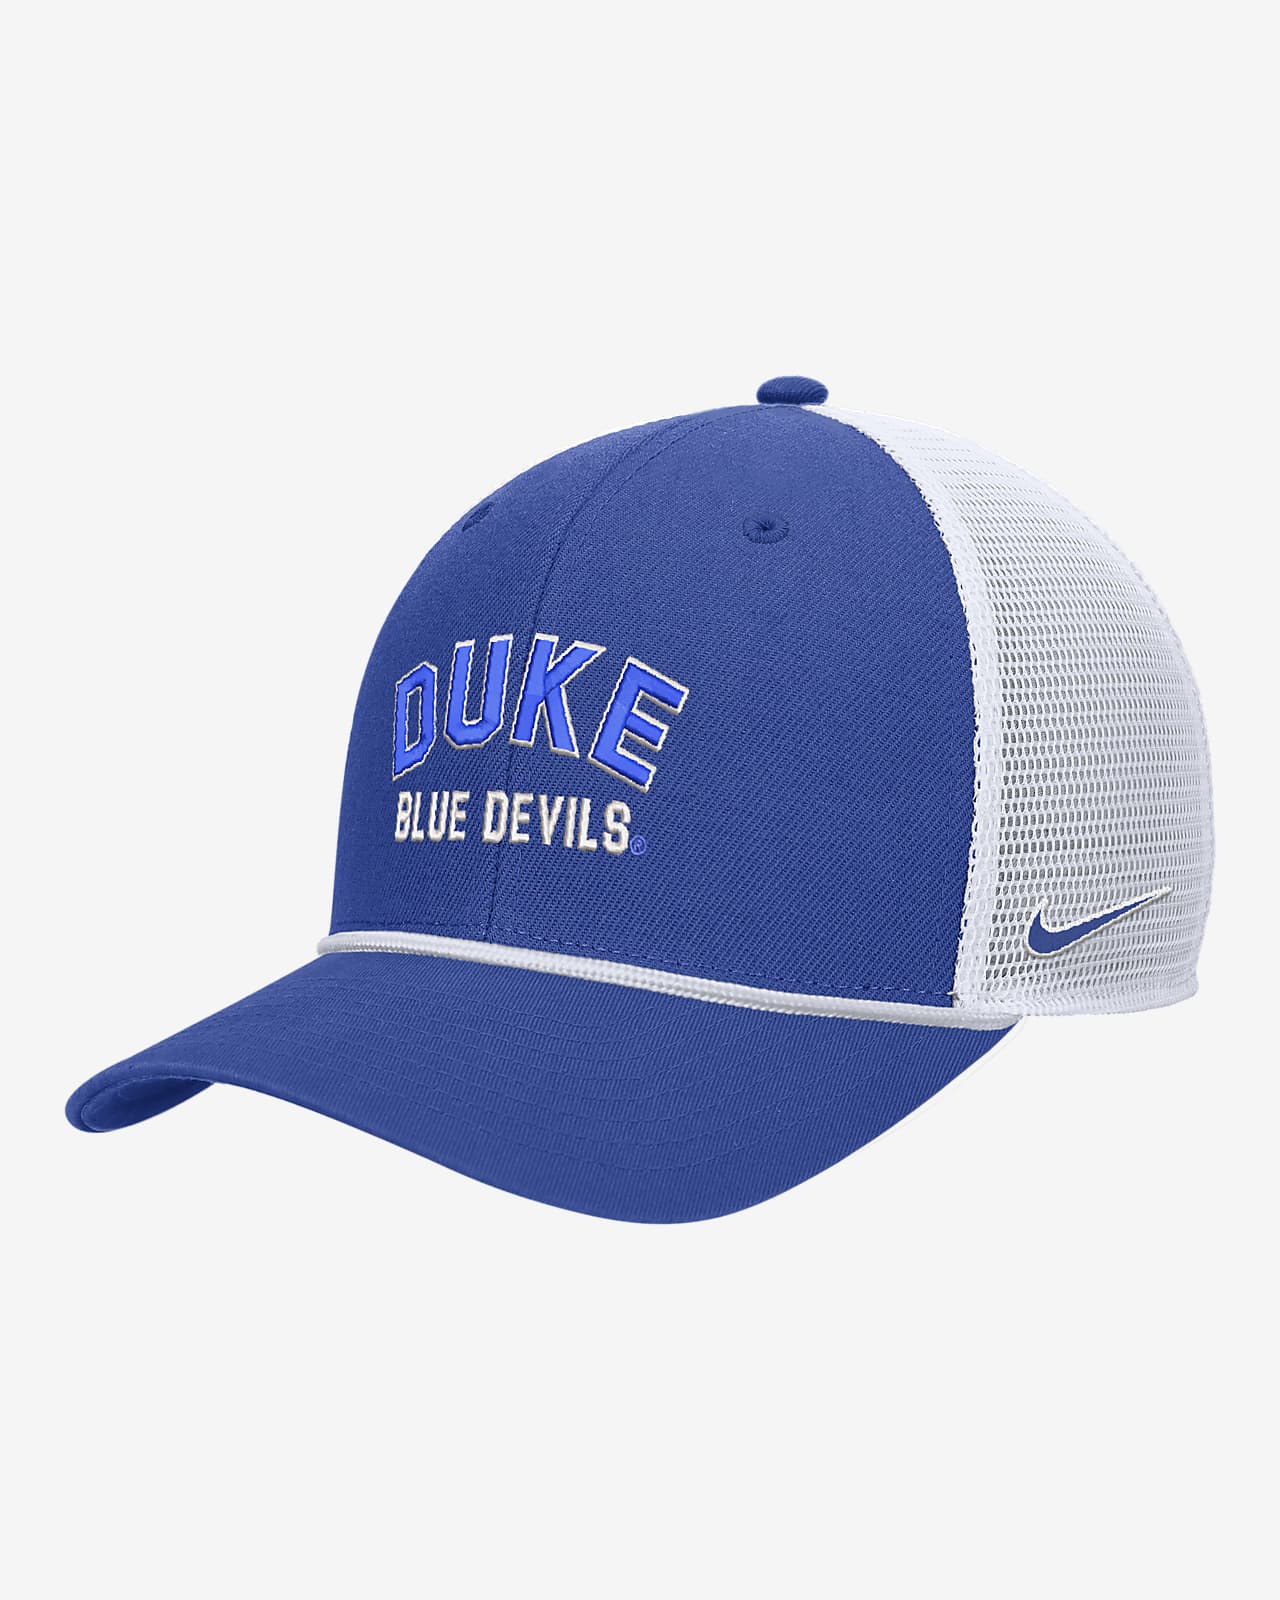 Duke Nike College Snapback Trucker Hat